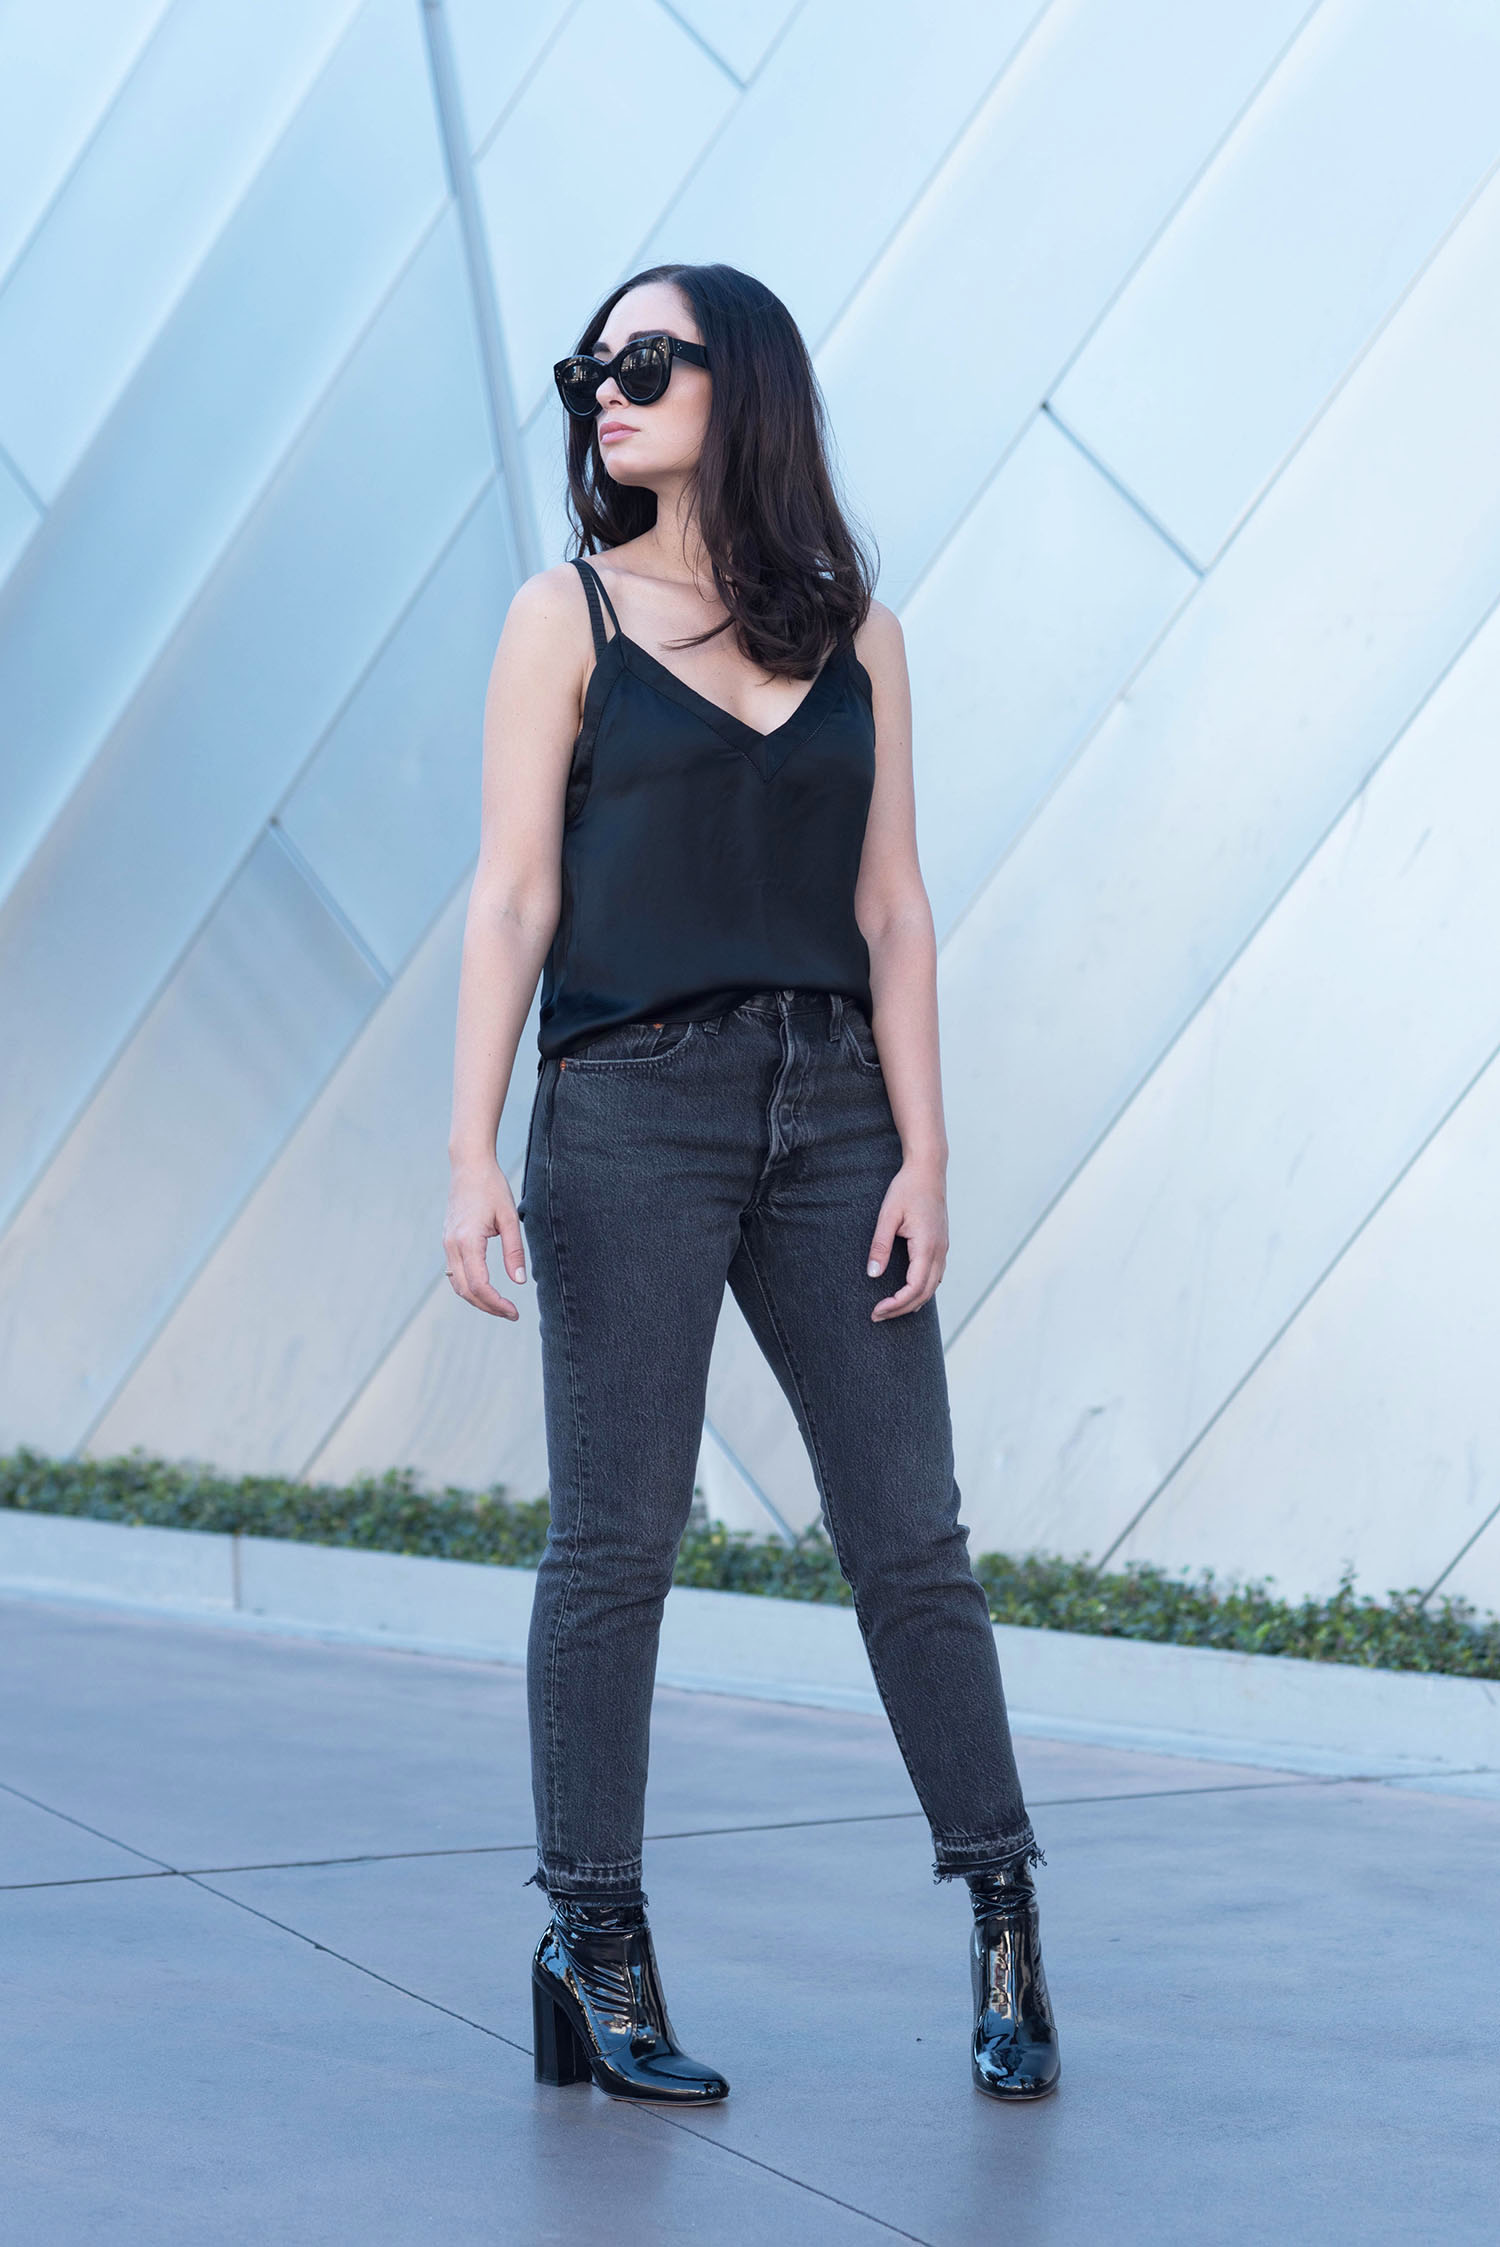 Winnipeg fashion blogger Cee Fardoe of Coco & Vera in Las Vegas wearing an Aritzia black silk tank and Levis 501 skinny jeans